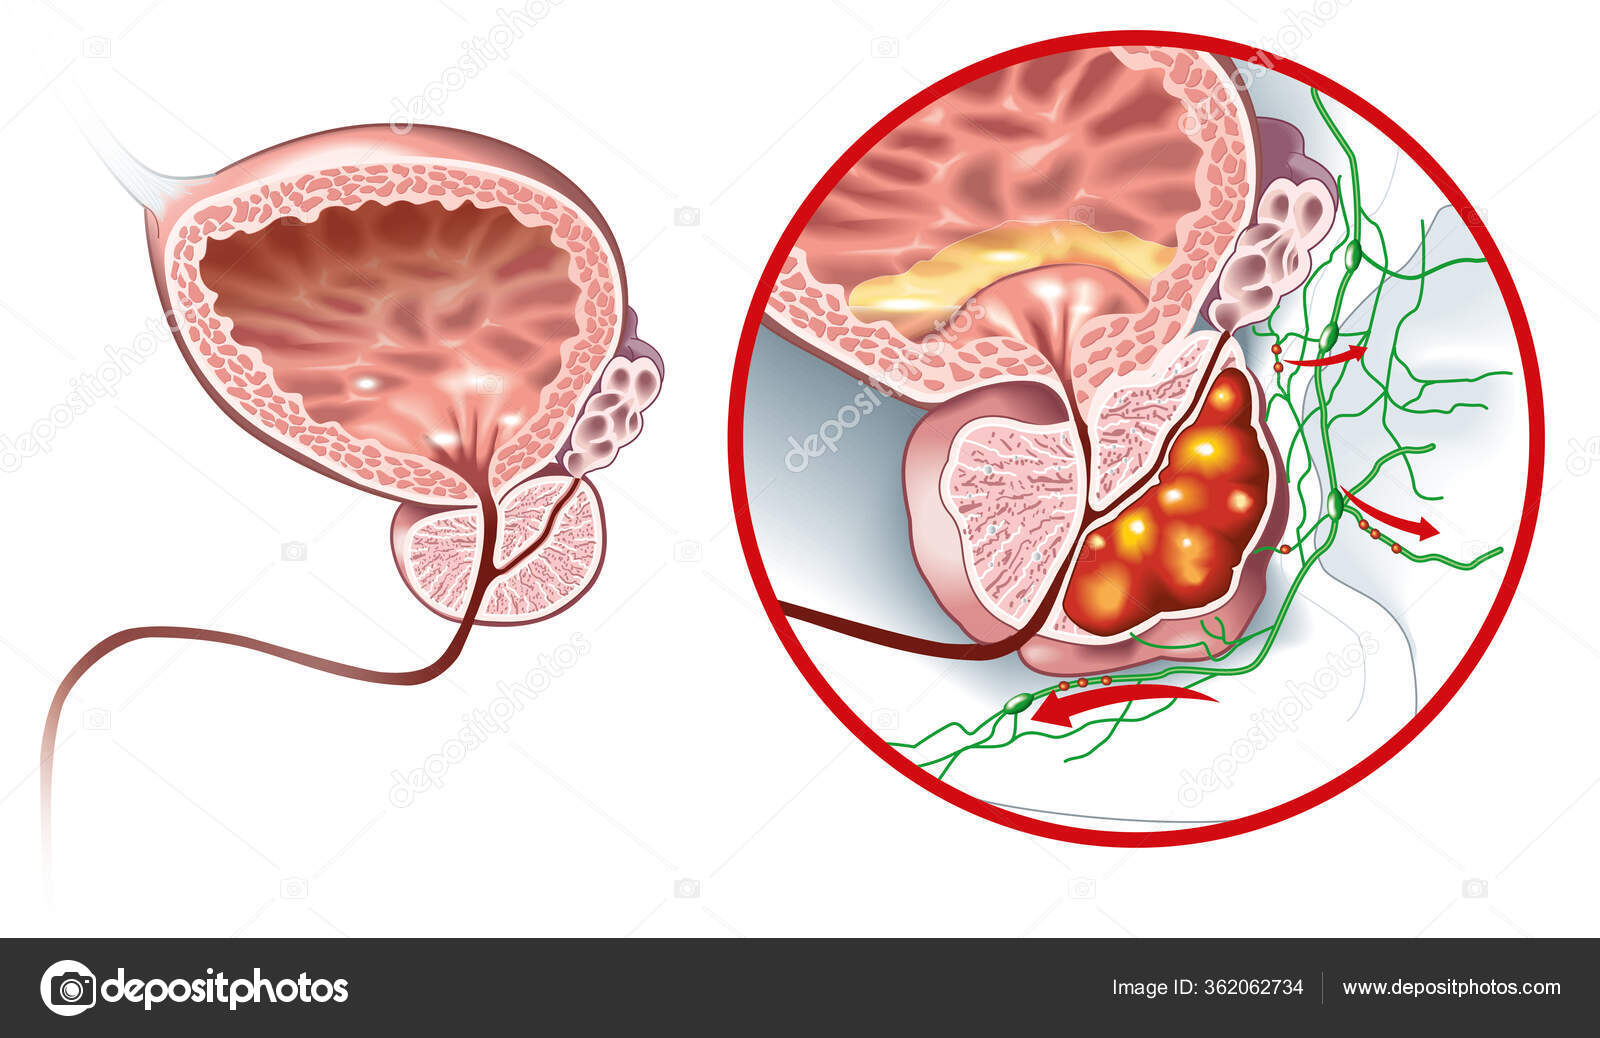 depositphotos_362062734-stock-illustration-medically-illustration-showing-healthy-prostate.jpg